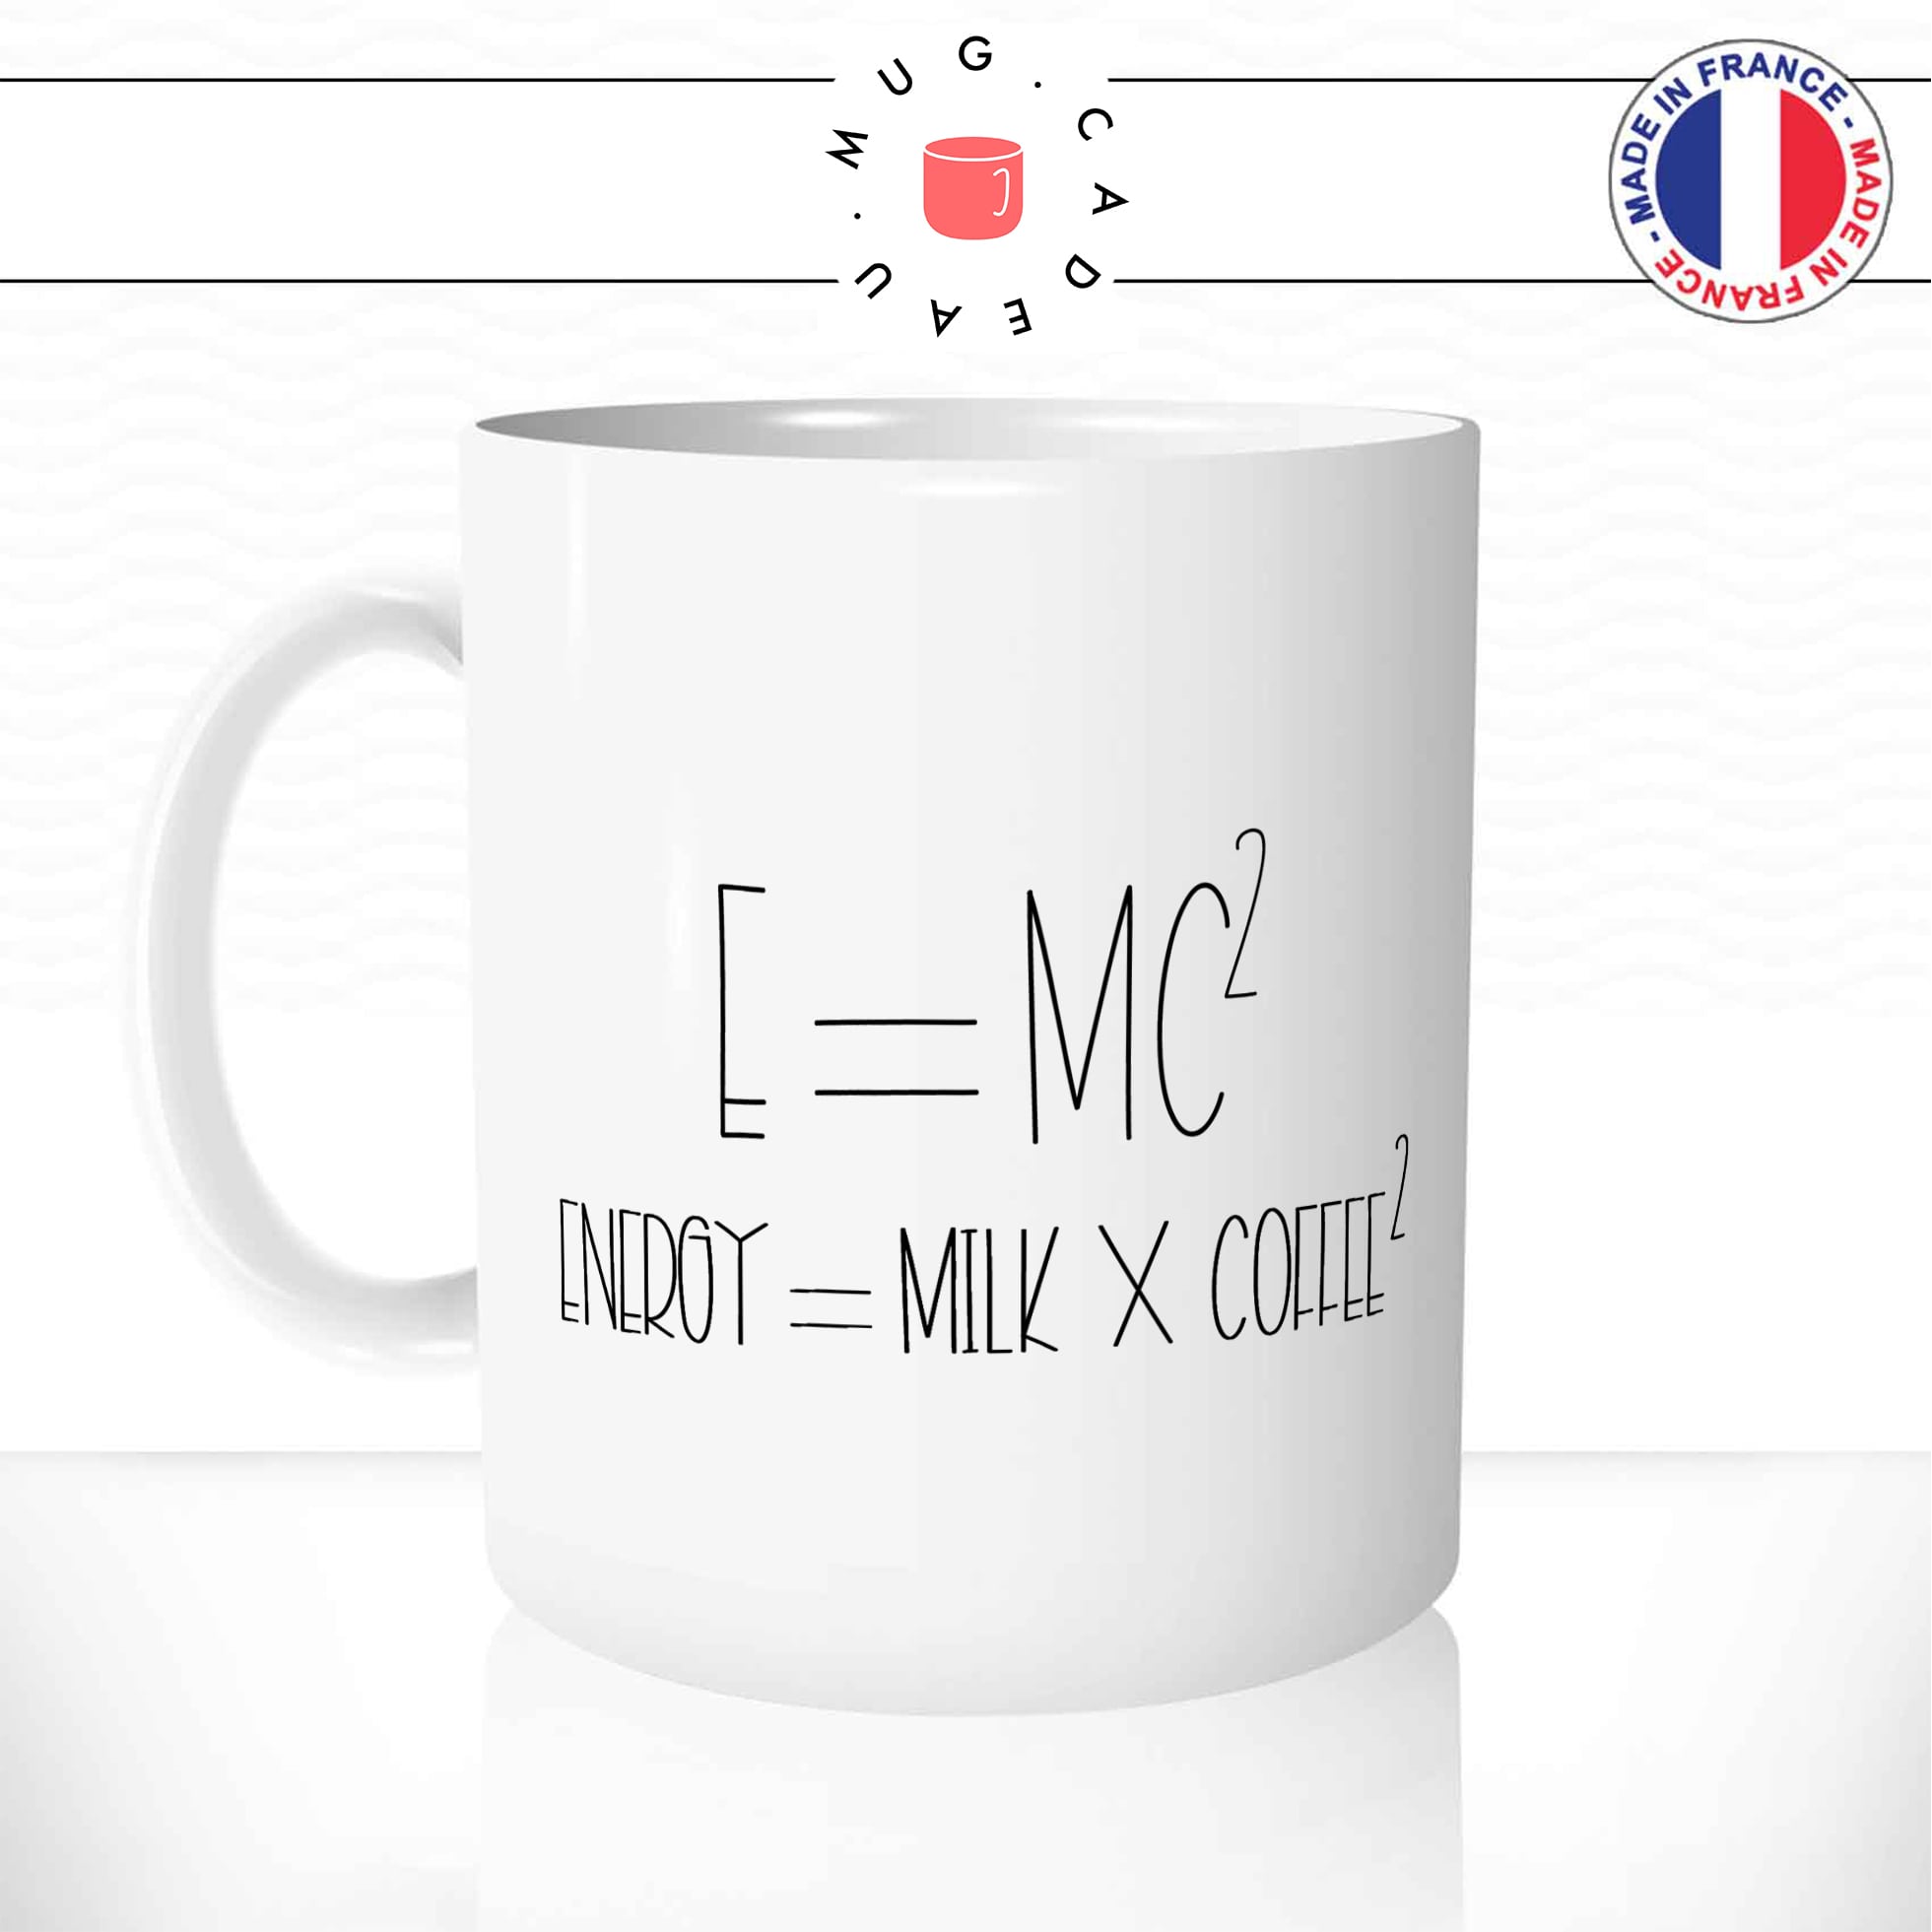 Mug Energy = Milk x Coffee